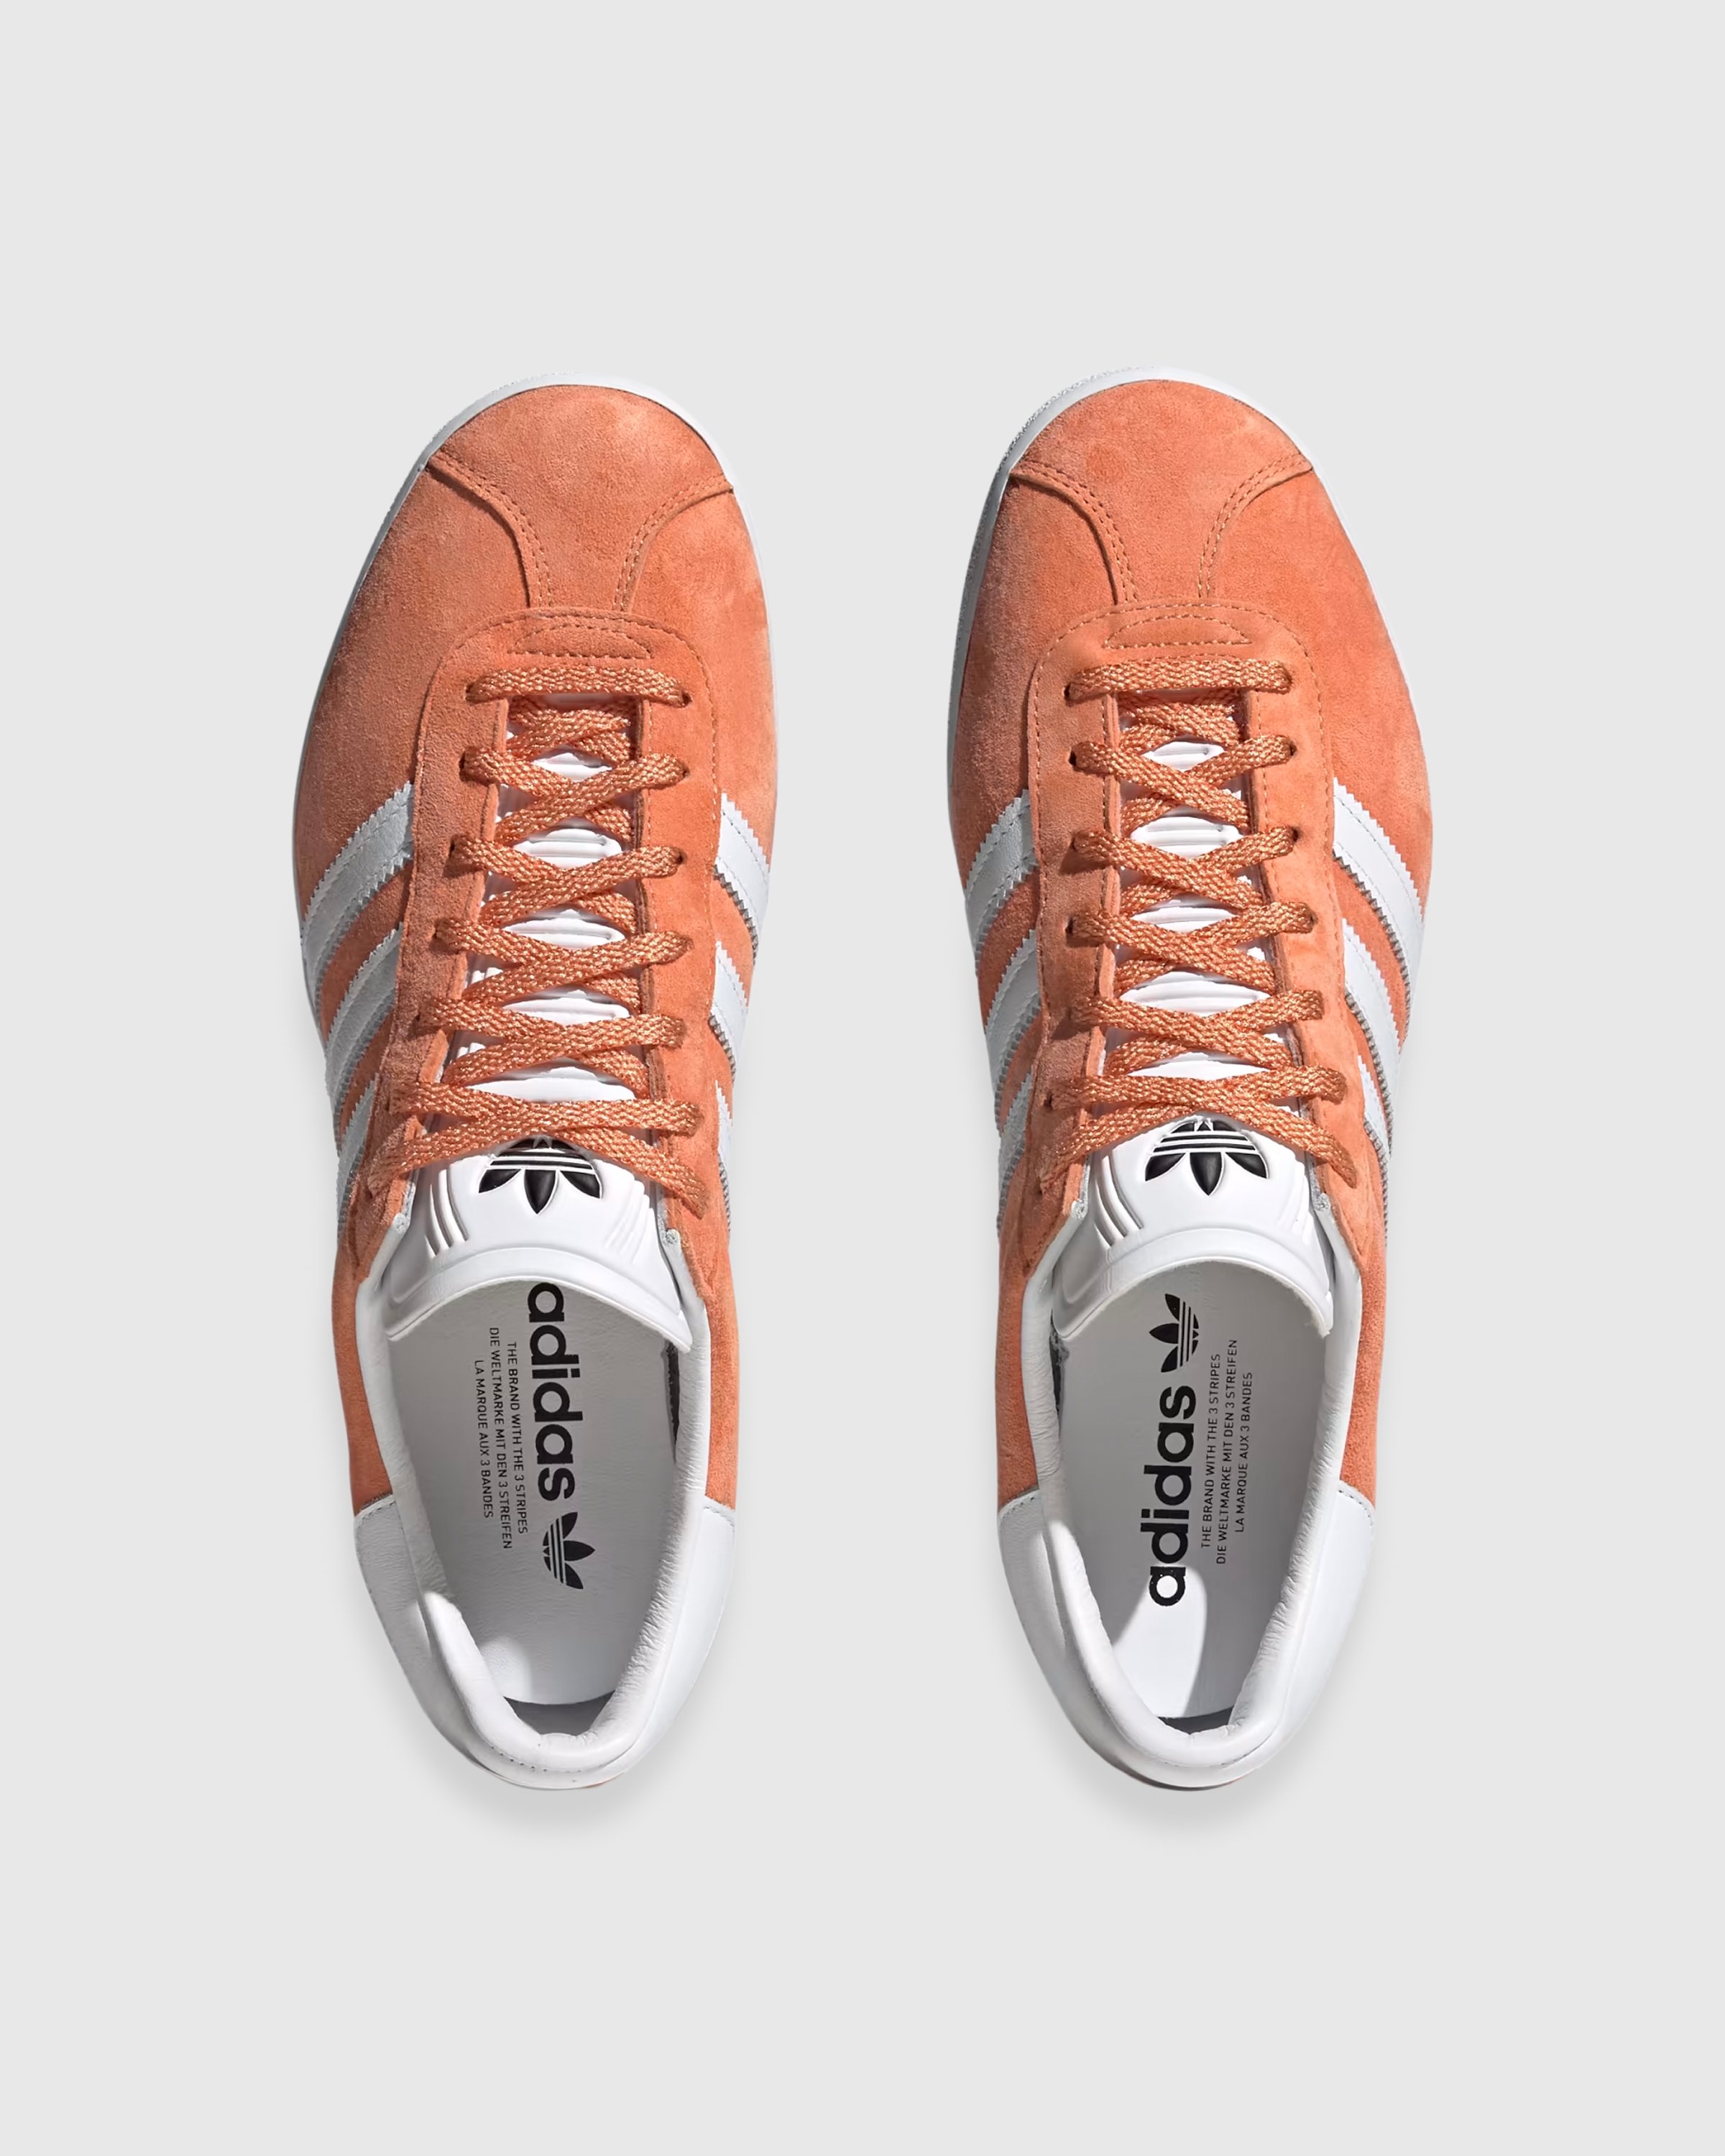 Adidas - Gazelle 85 Orange - Footwear - Orange - Image 5